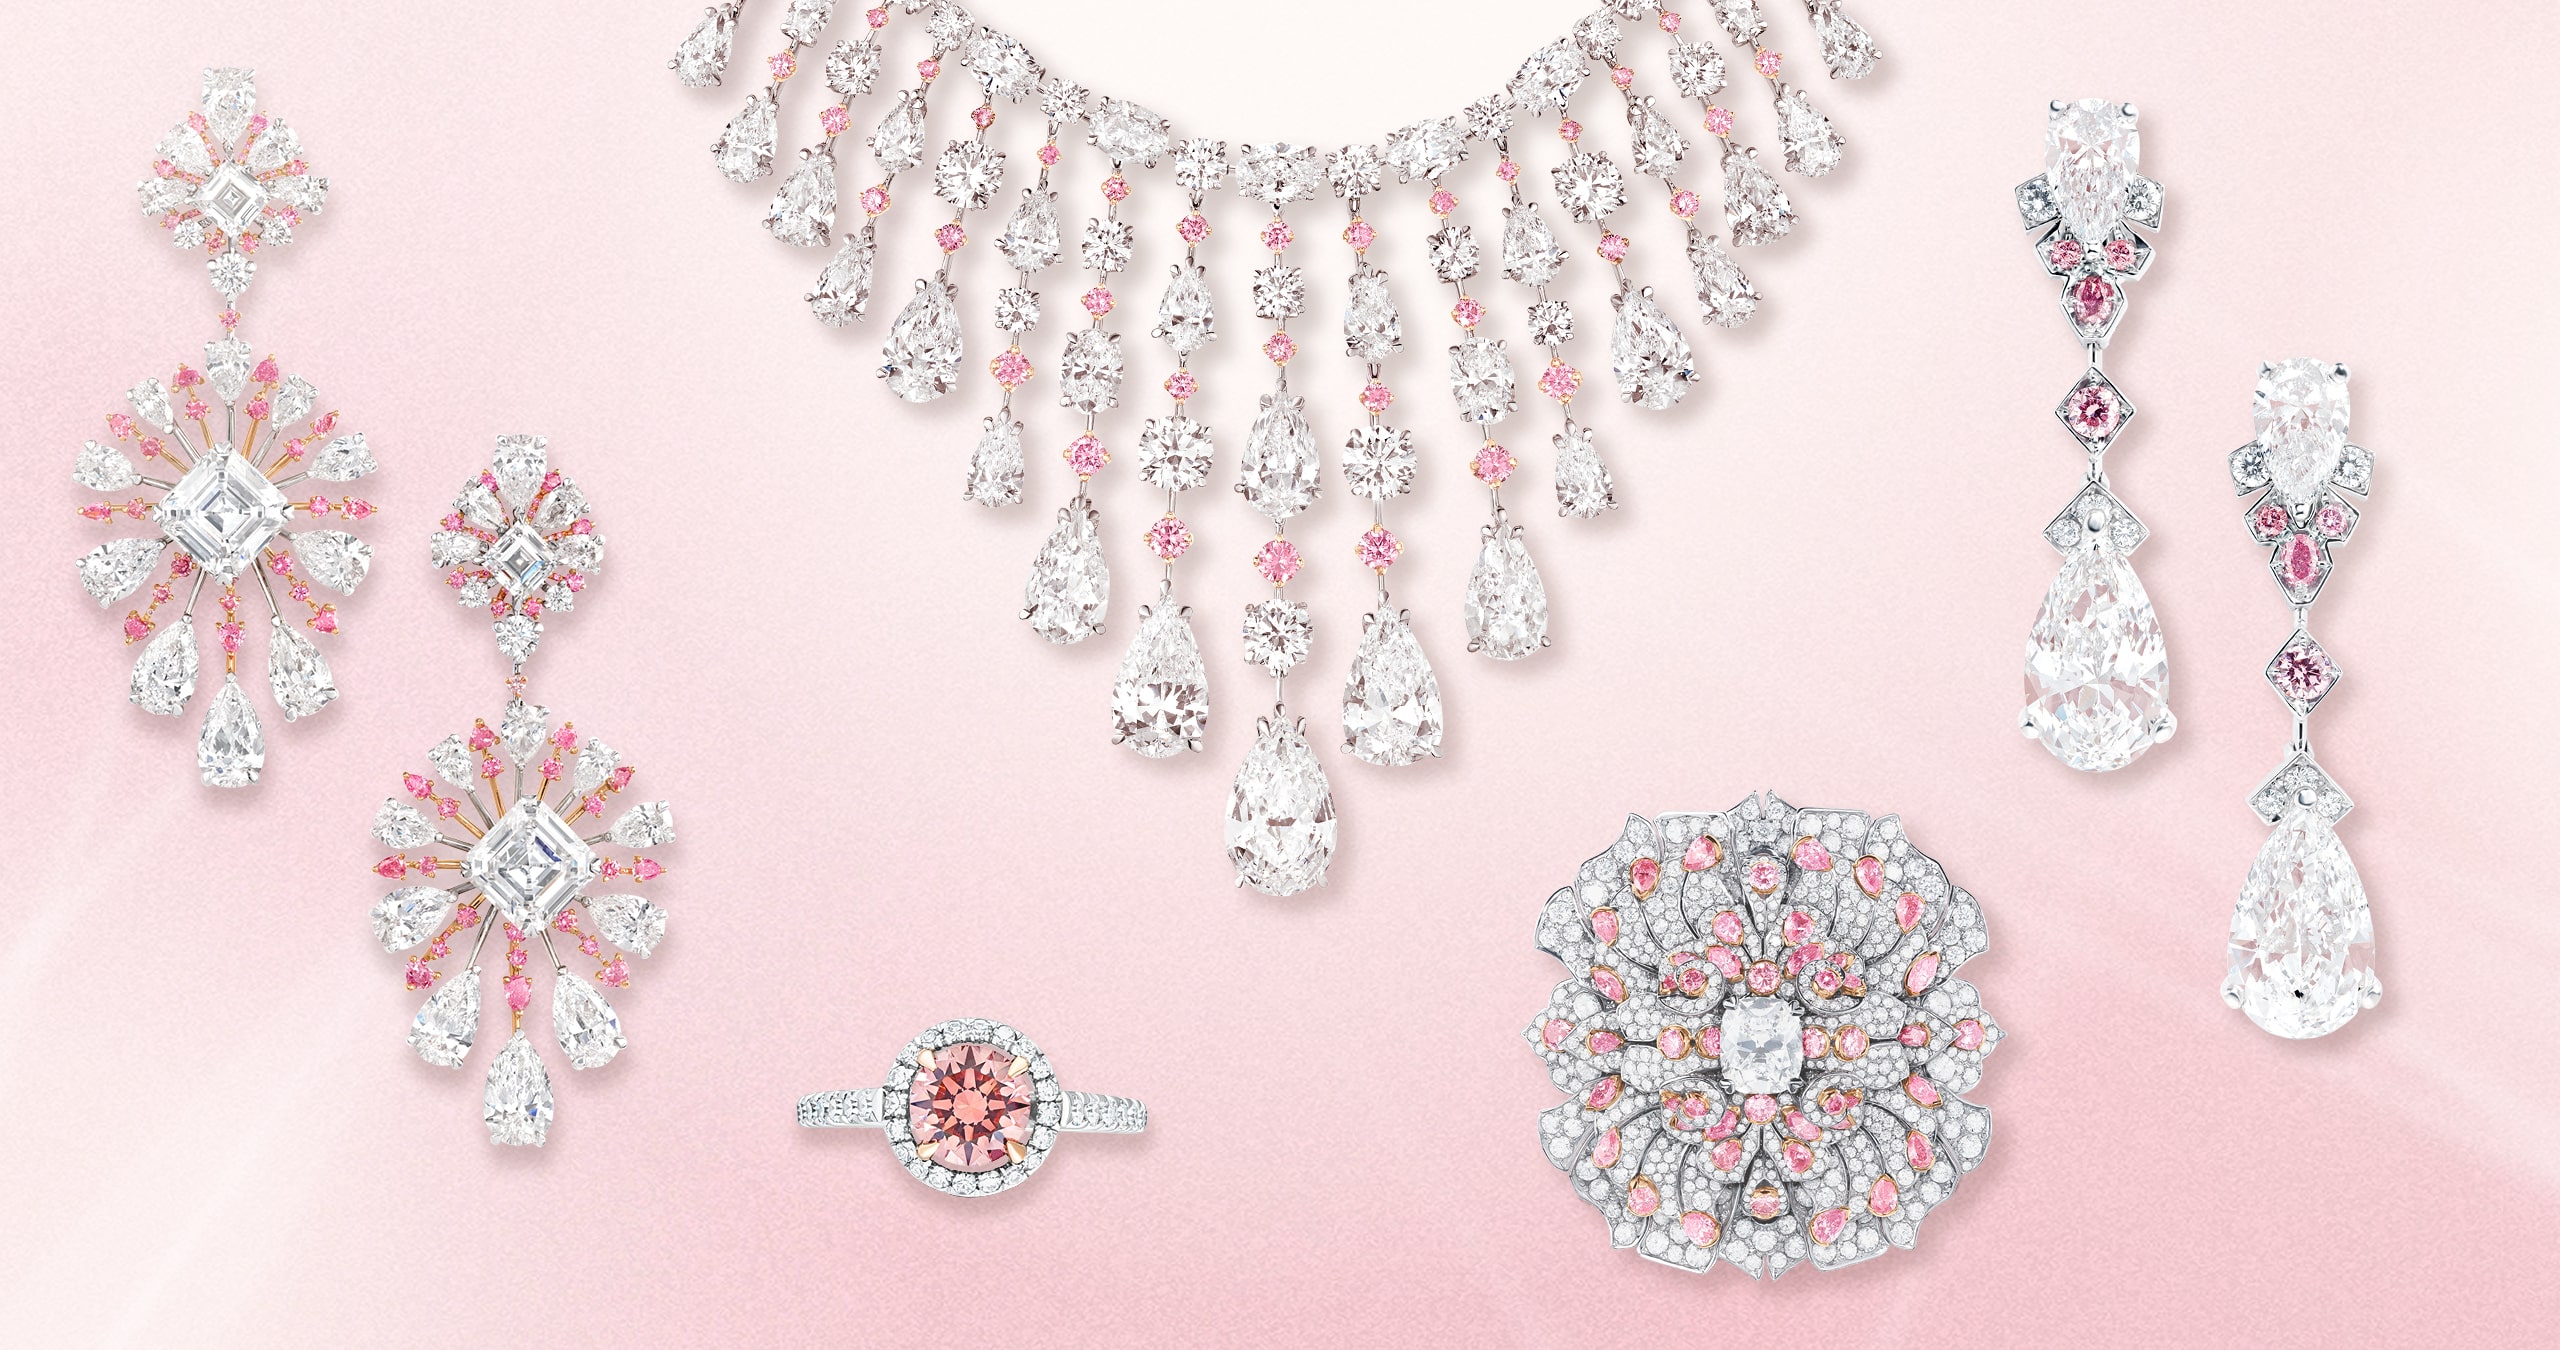 Pink diamond radiance earrings, diamond necklace, diamond drop earrings, diamond brooch, round diamond ring by David Morris